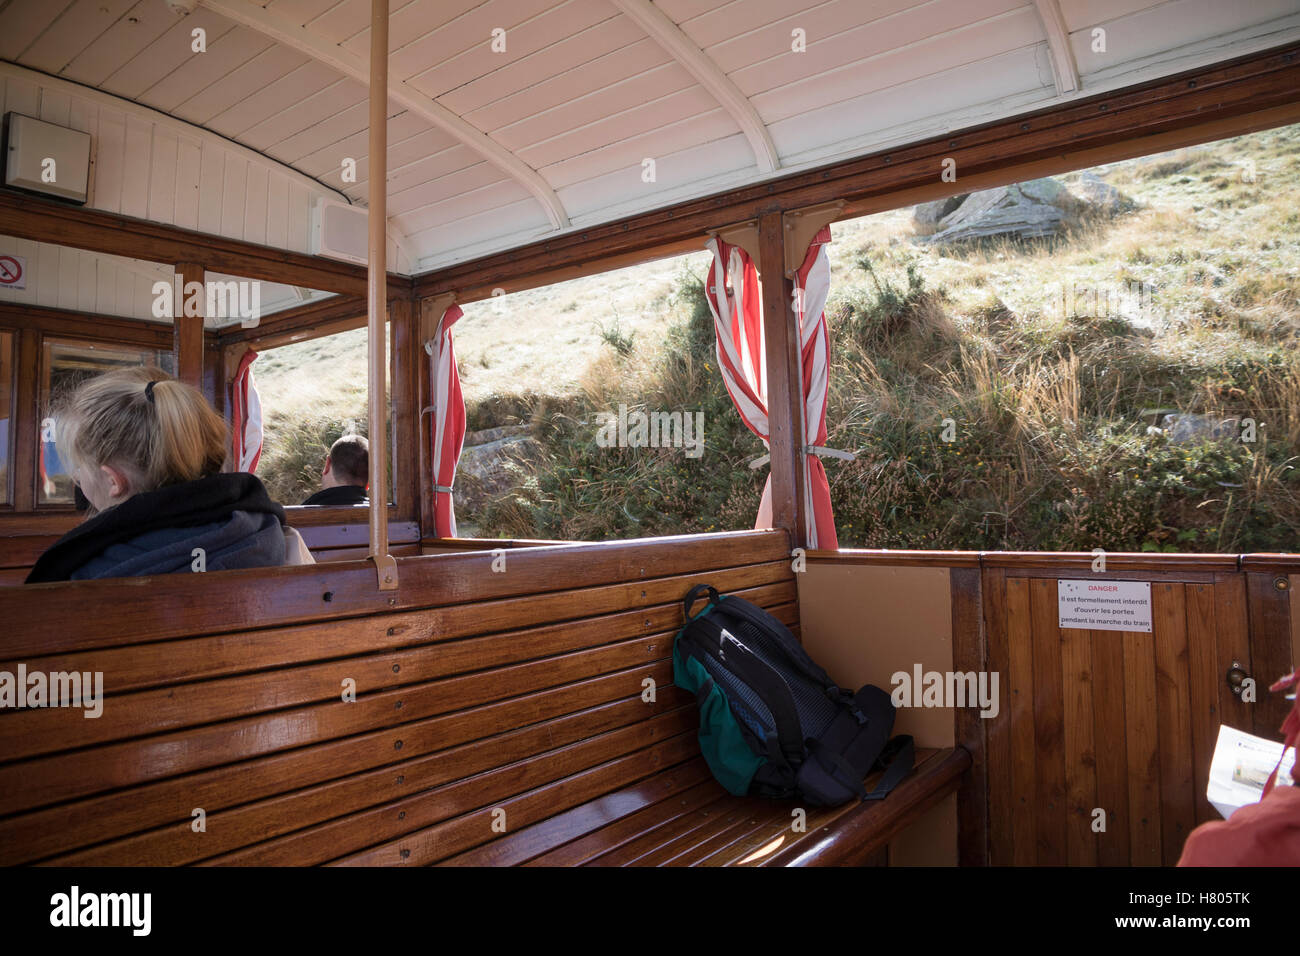 La Rhune, rack railway, interior of carriage Stock Photo